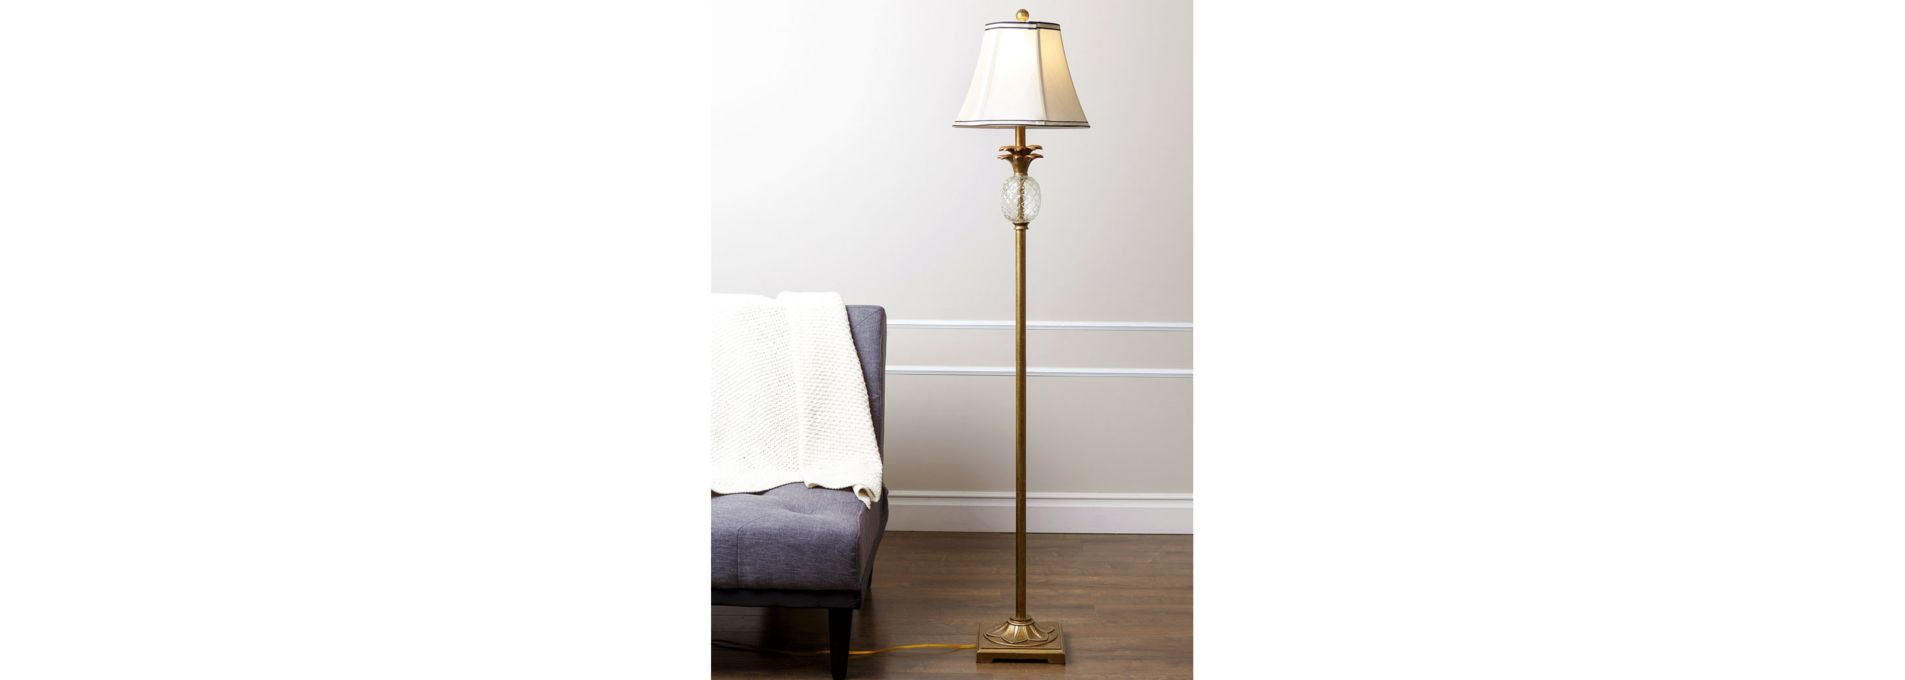 Alexandra Pineapple Floor Lamp regarding dimensions 1905 X 680